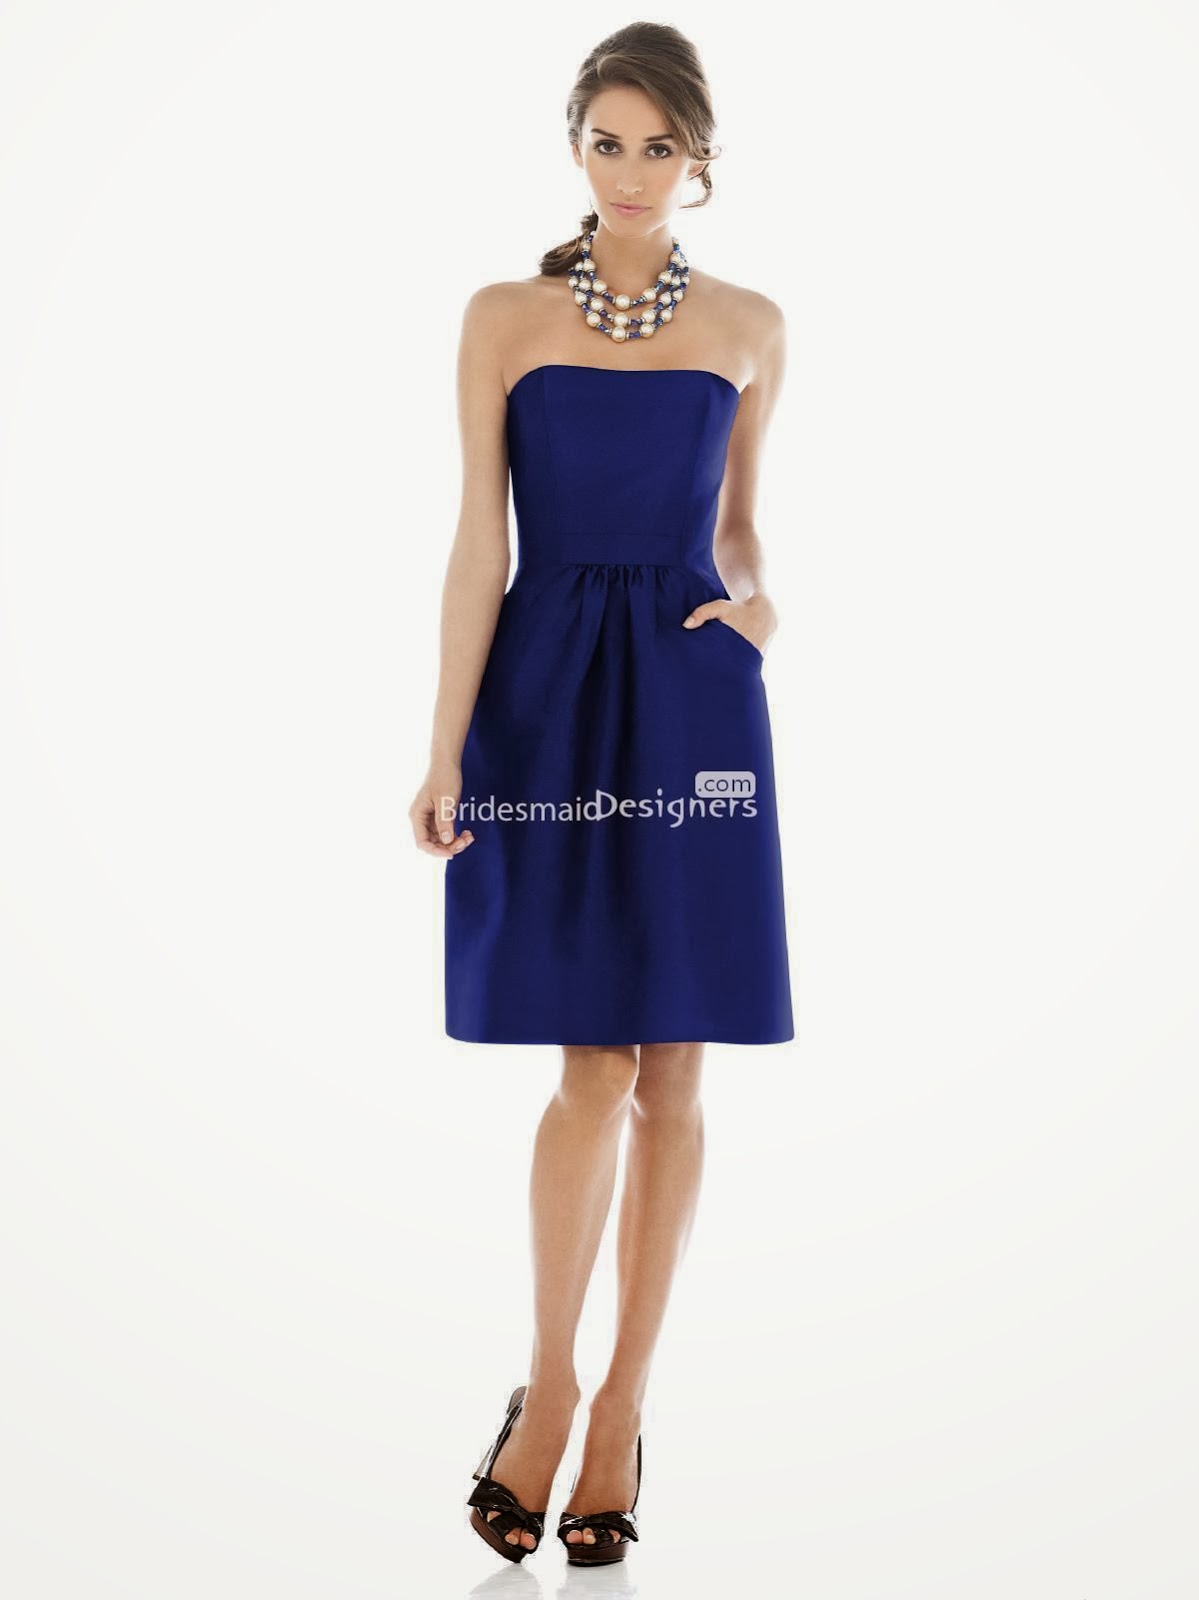 http://www.bridesmaiddesigners.com/dramatic-royal-blue-sleeveless-knee-length-a-line-pleated-bridesmaid-dress-with-pocket-666.html